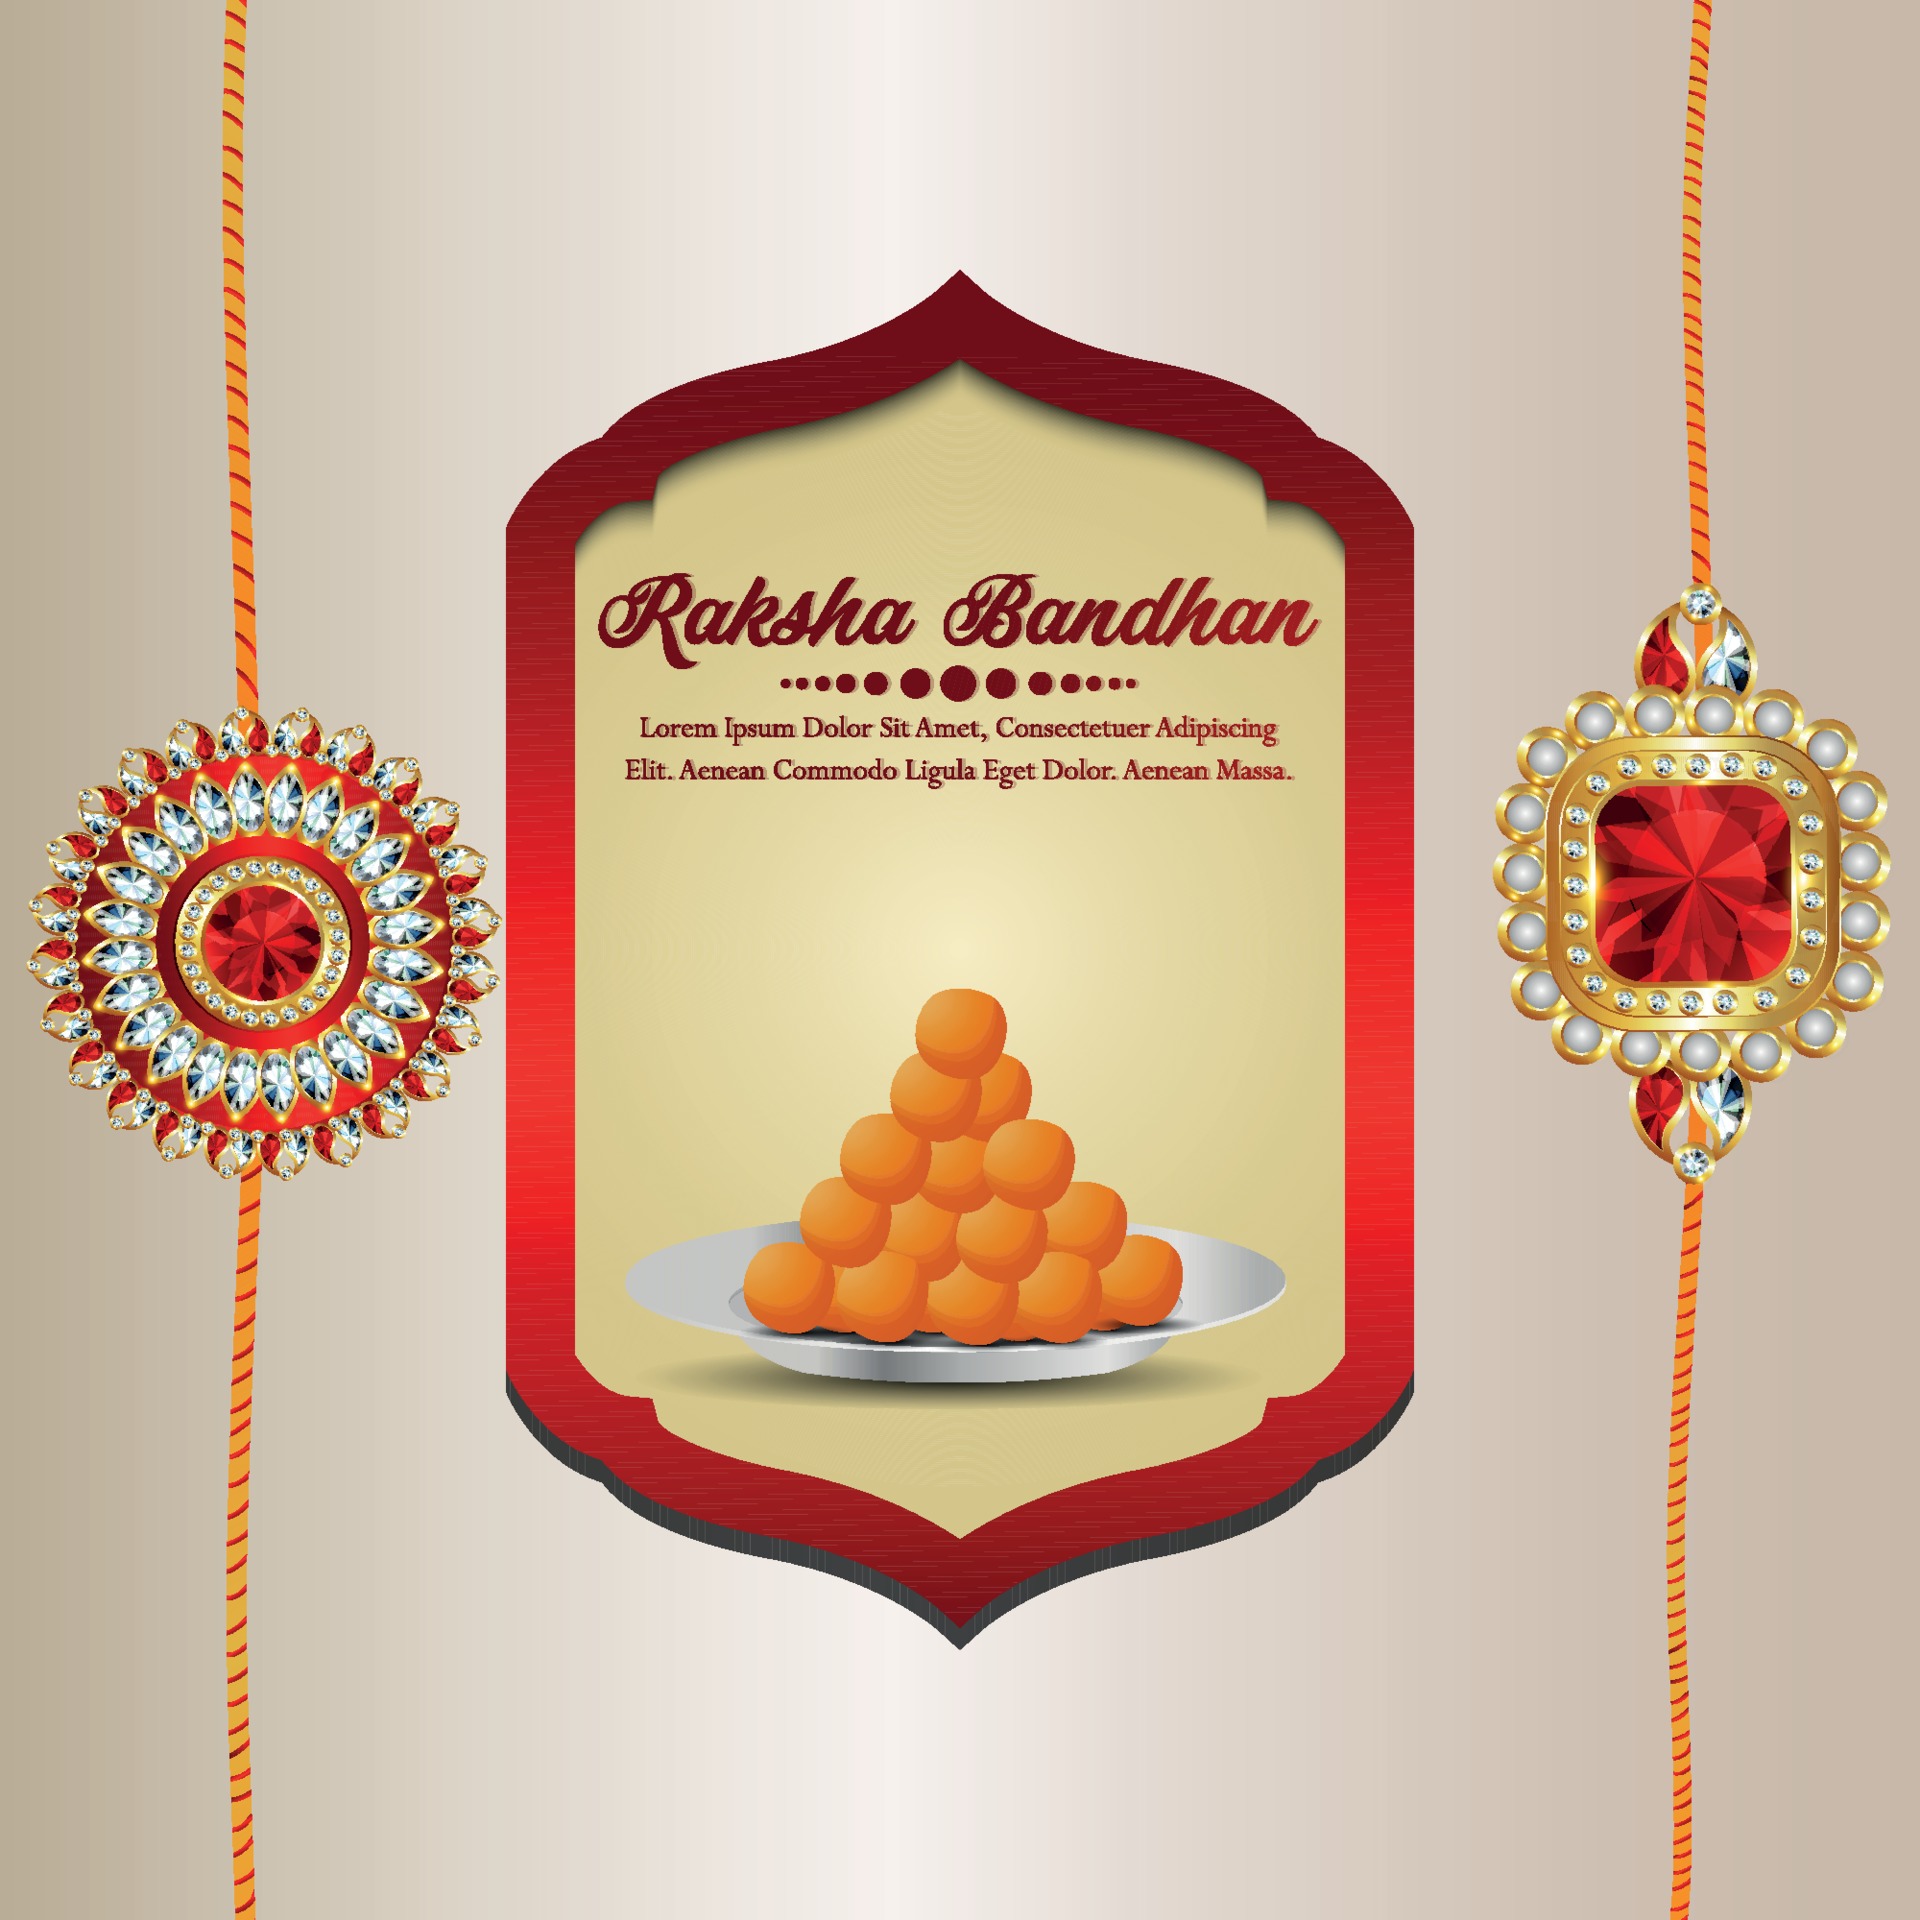 Raksha bandhan invitation vector illustration with crystal rakhi on  creative background 2366426 Vector Art at Vecteezy